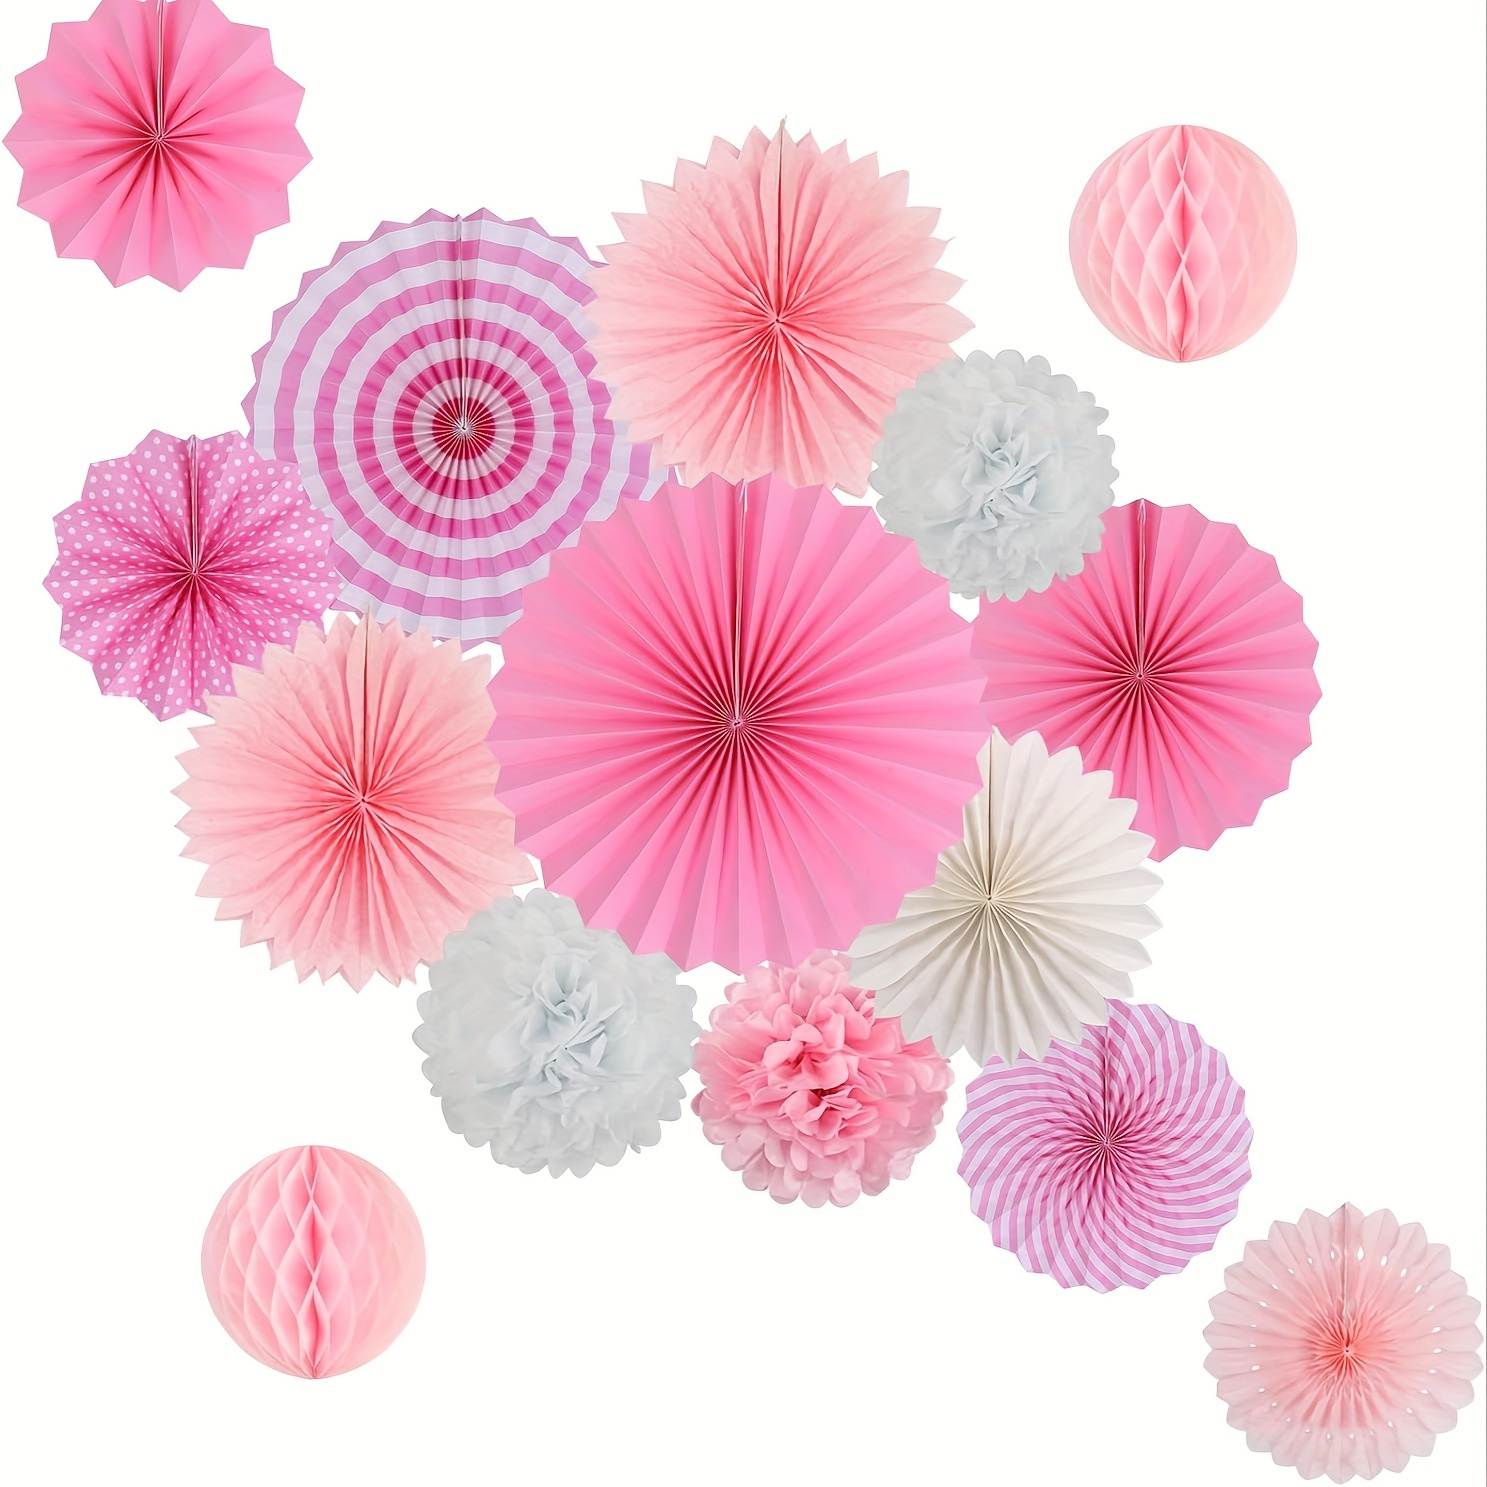 

18 Pcs Pink Party Decorations Paper Pom Poms Honeycomb Balls Lanterns Tissue Fans For Birthday Wedding Baby Shower Graduation Valentine Party Supplies